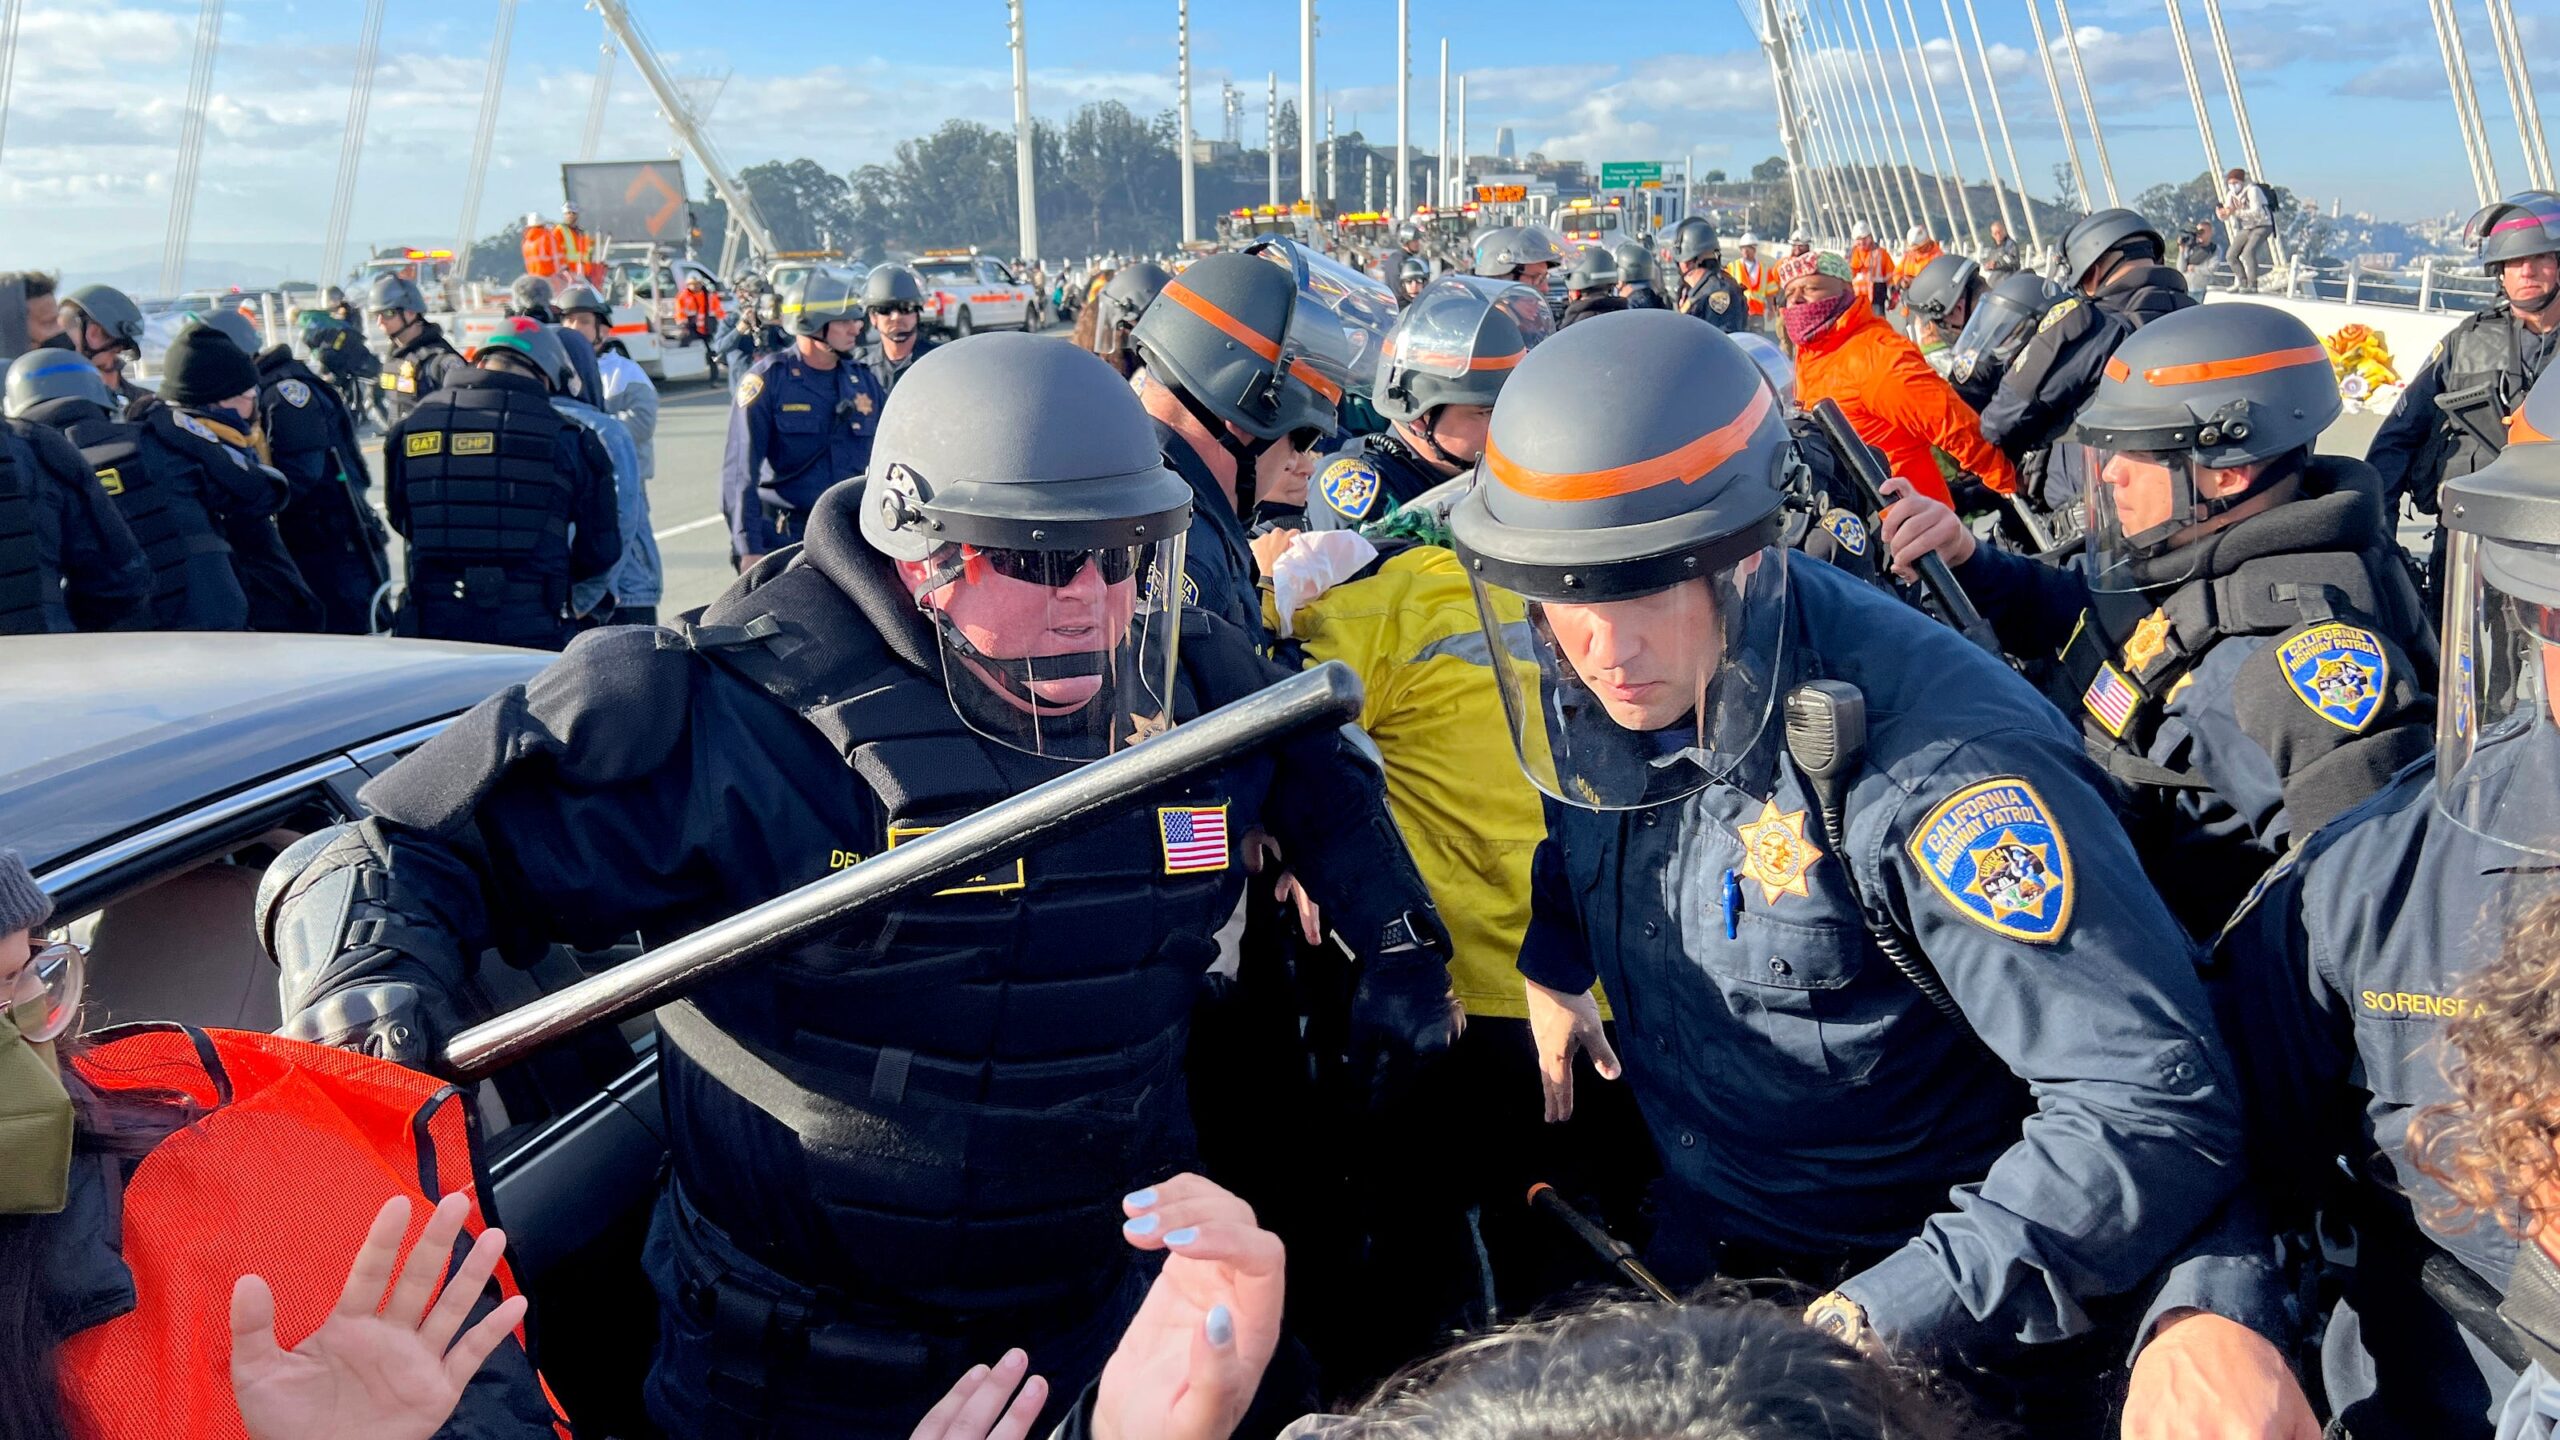 81 Arrested in Bay Bridge Protest over APEC Summit in San Francisco